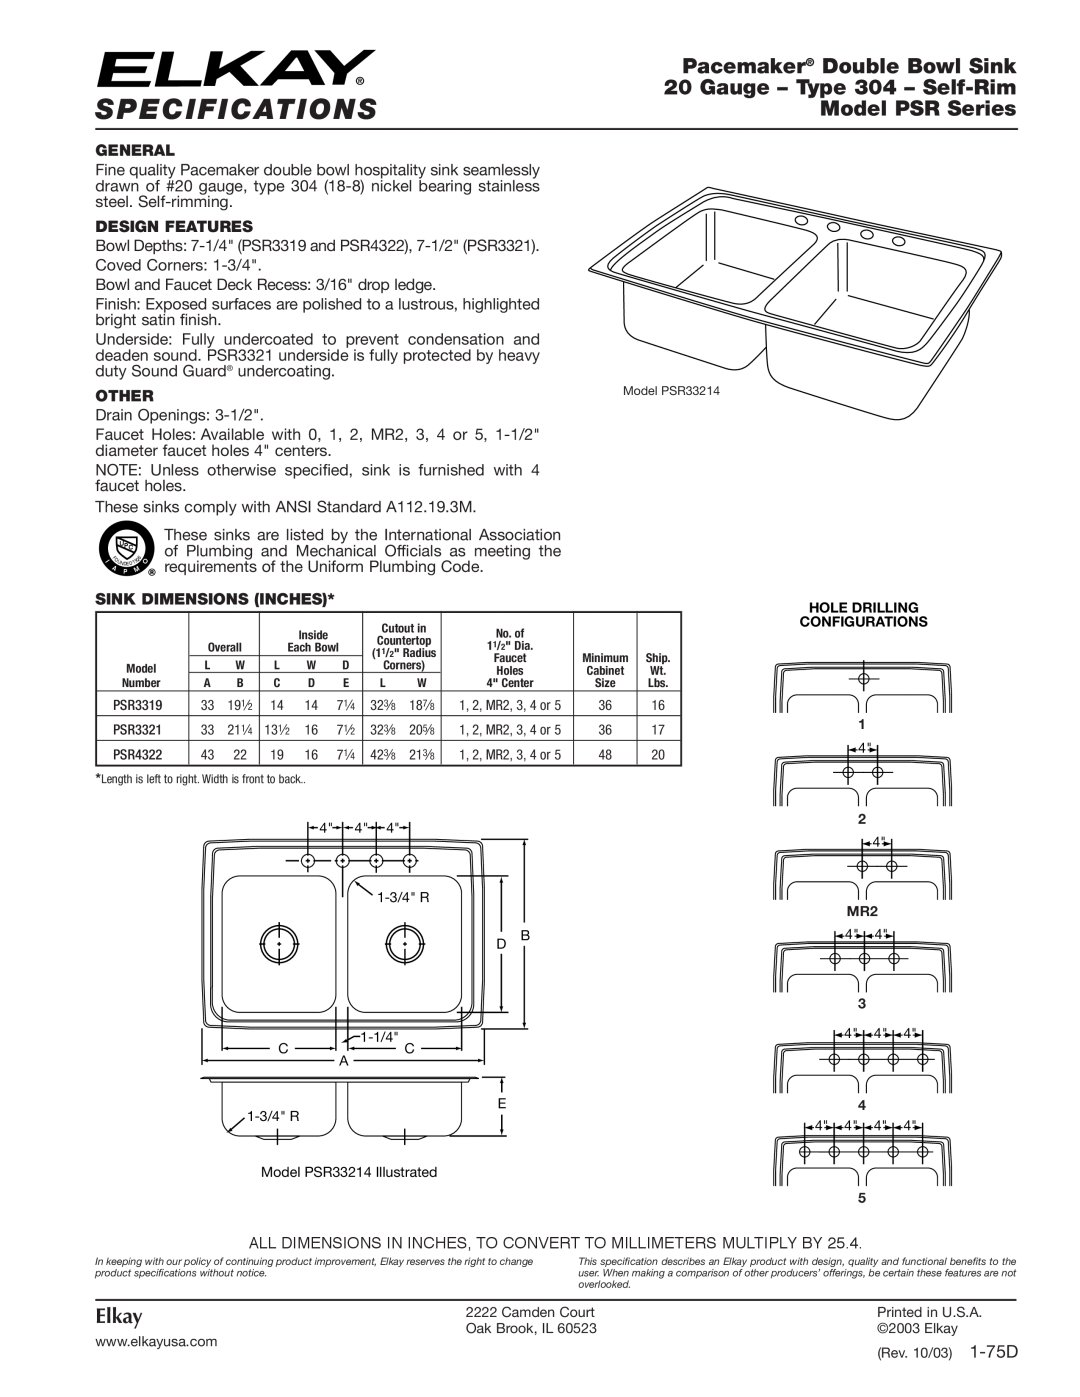 Elkay PSR33214 specifications Specifications, Pacemaker Double Bowl Sink, Gauge - Type 304 - Self-Rim, Model PSR Series 